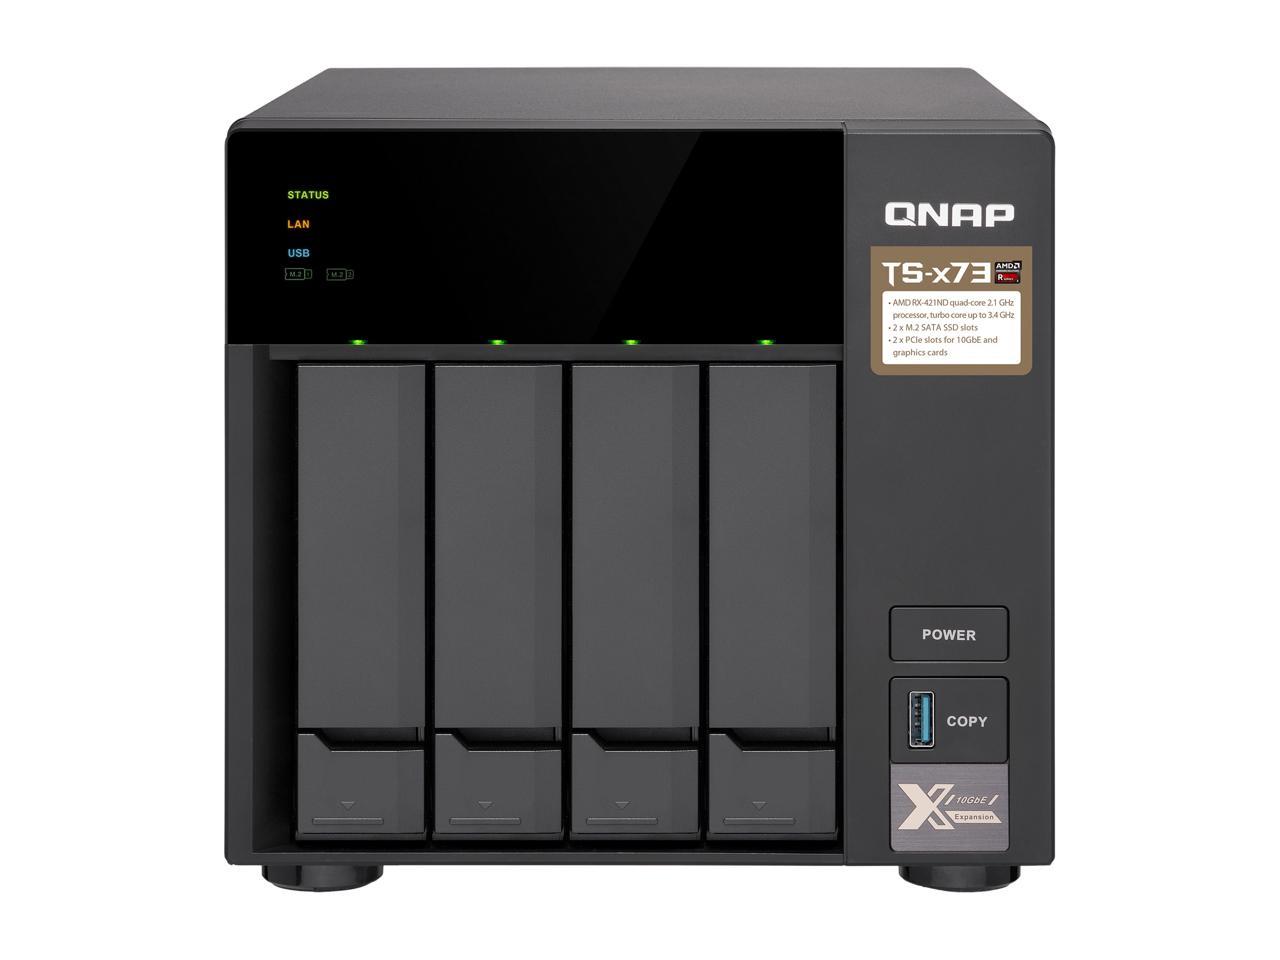 QNAP TS-473-4G-US 4-Bay NAS/iSCSI IP-SAN, AMD R Series Quad-core 2.1GHz, 4GB RAM, 10G-Ready